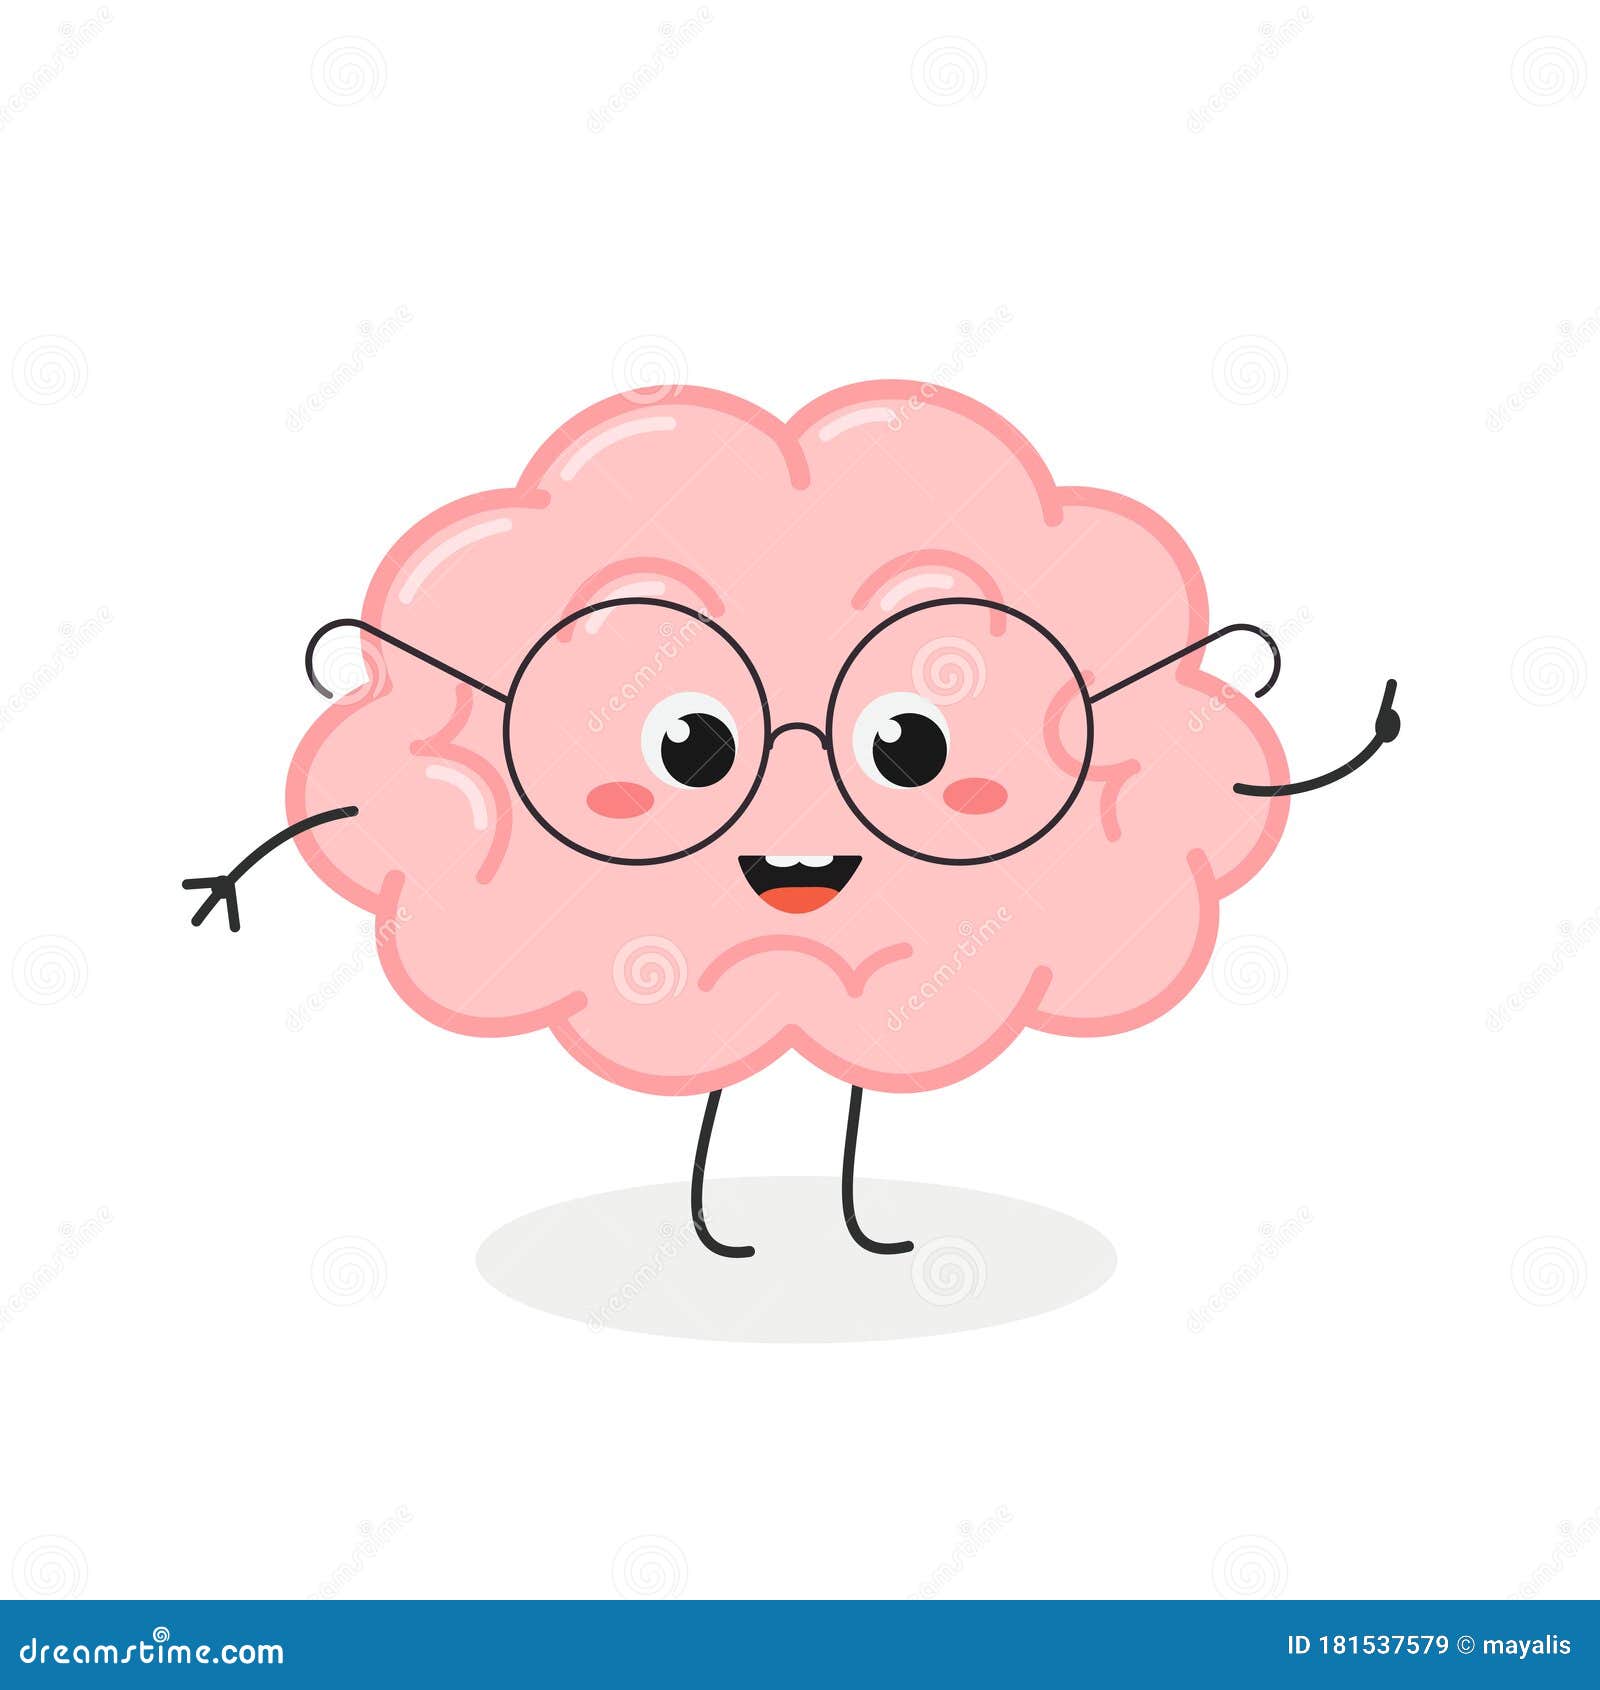 Cute Nerd Brain Cartoon Character in Glasses Stock Vector - Illustration of  comic, hand: 181537579